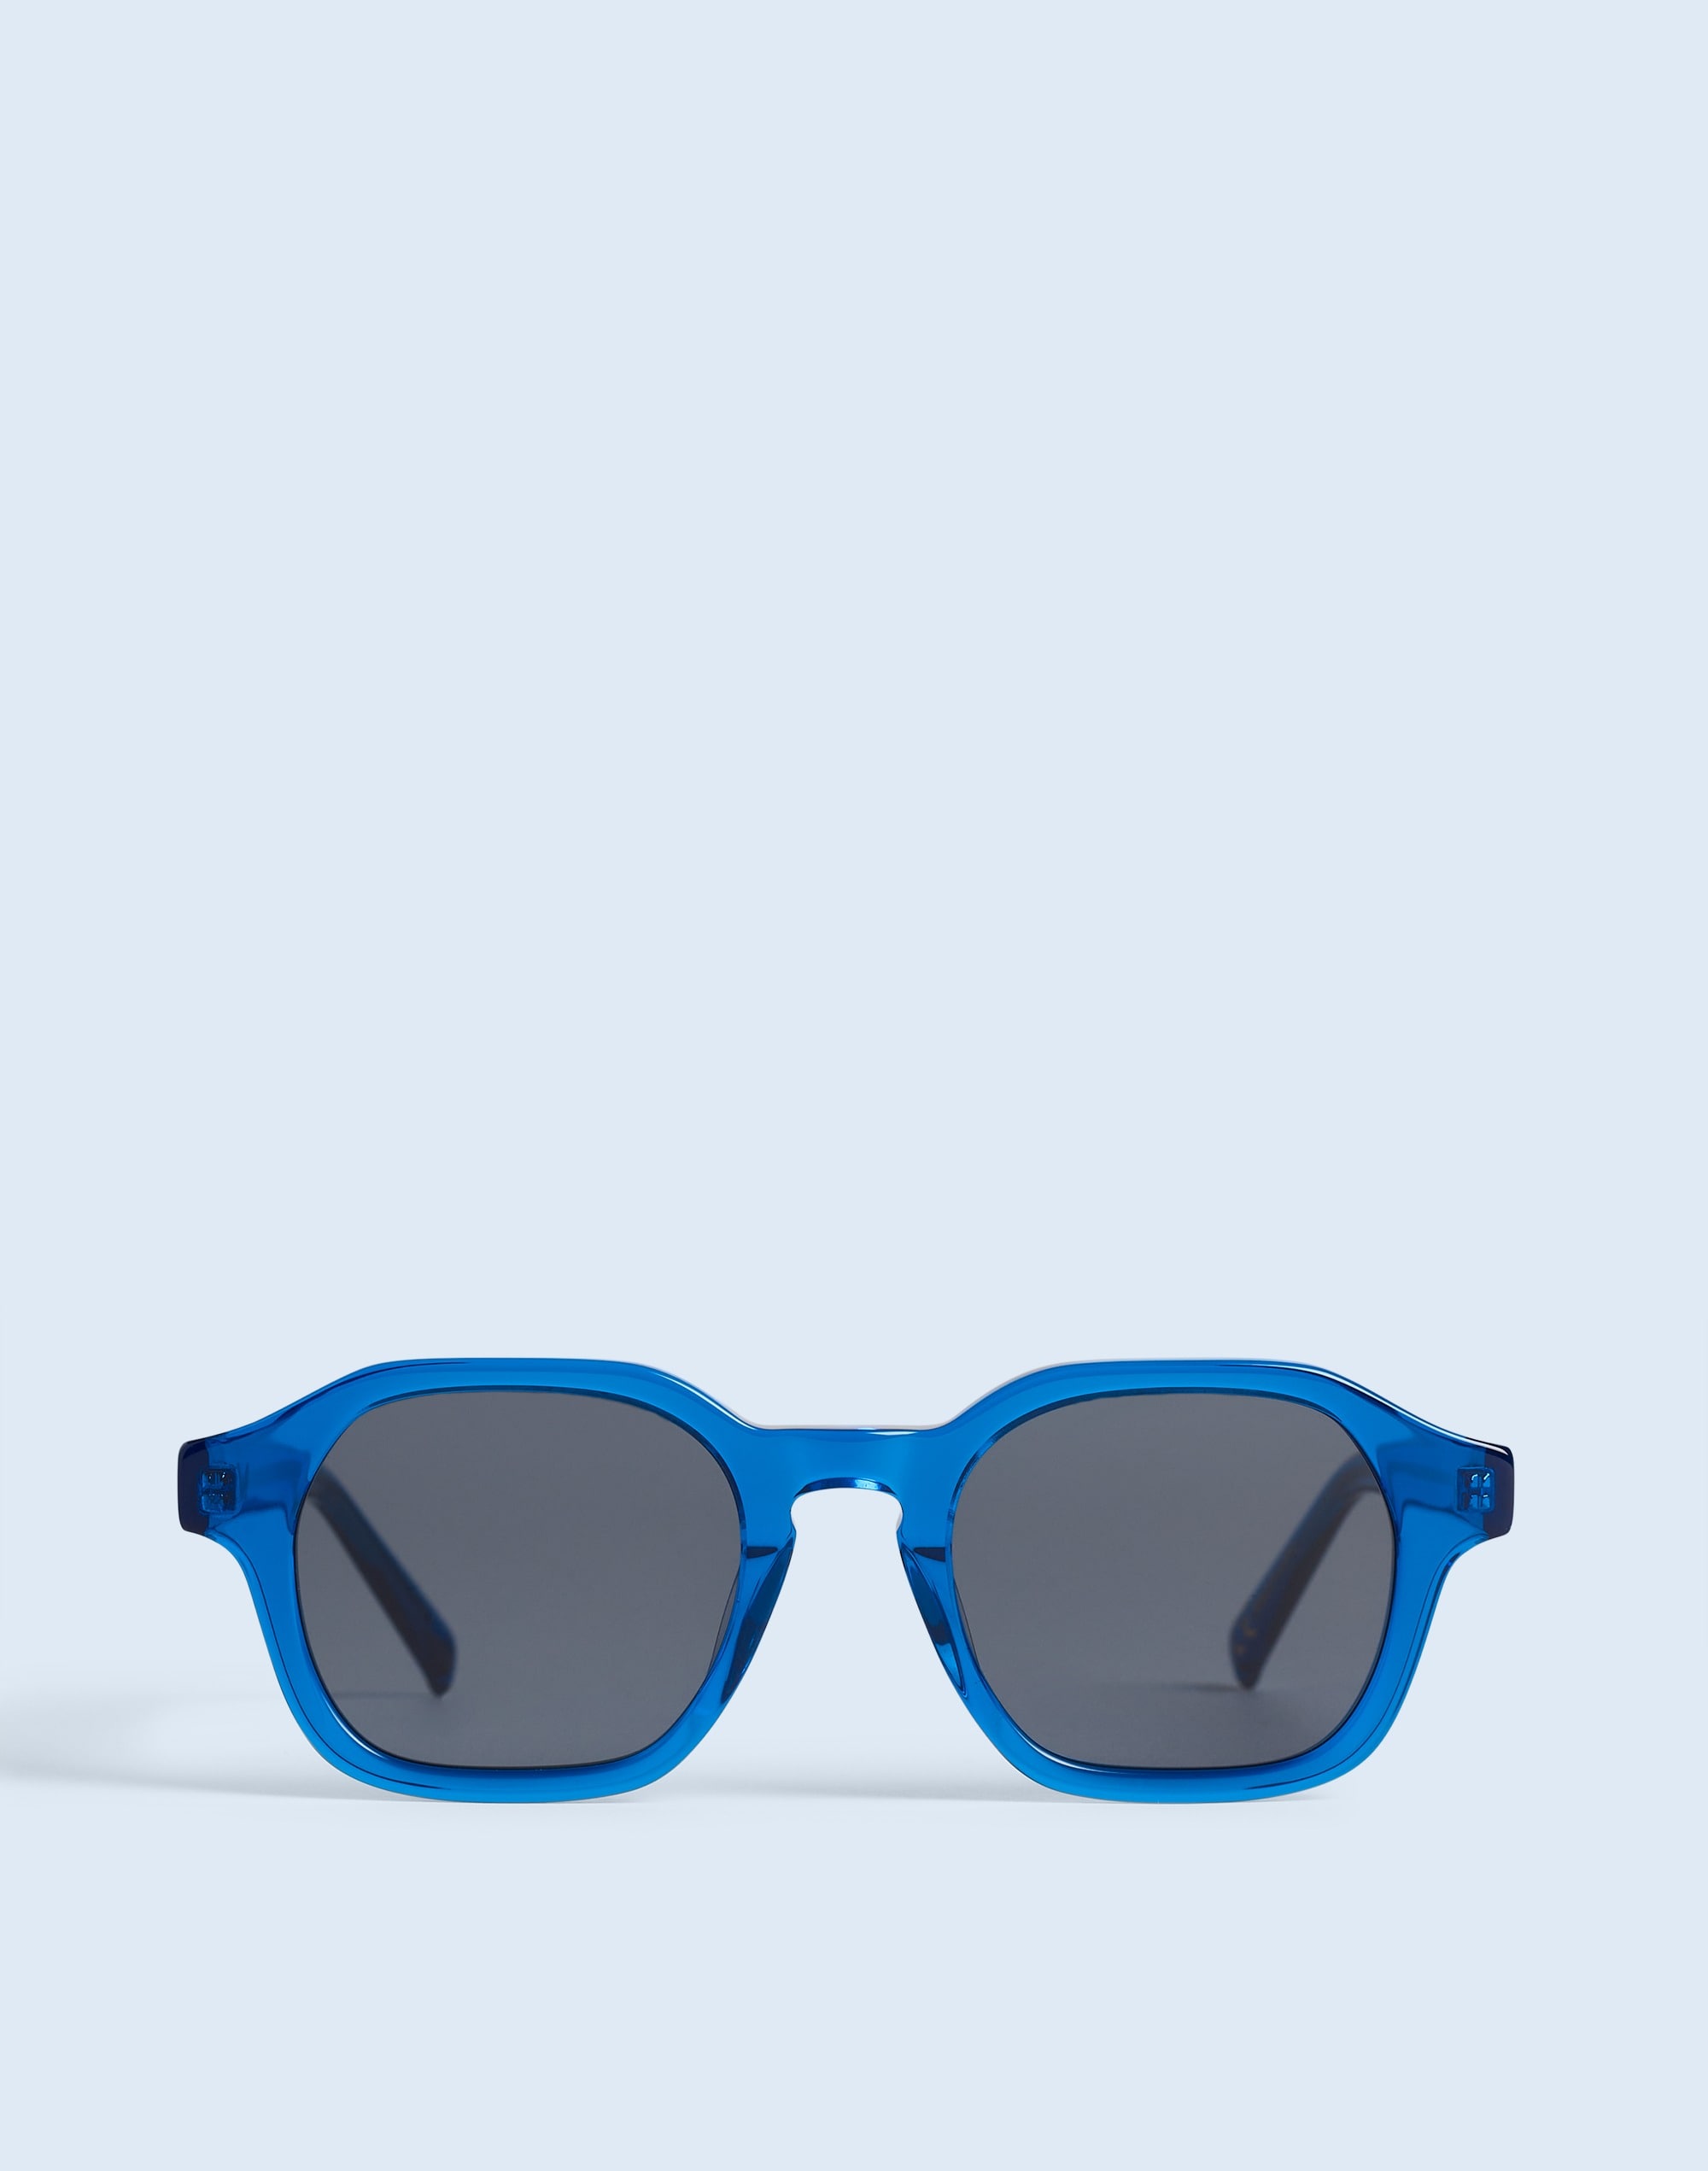 Mw Graphton Acetate Sunglasses In Pure Blue